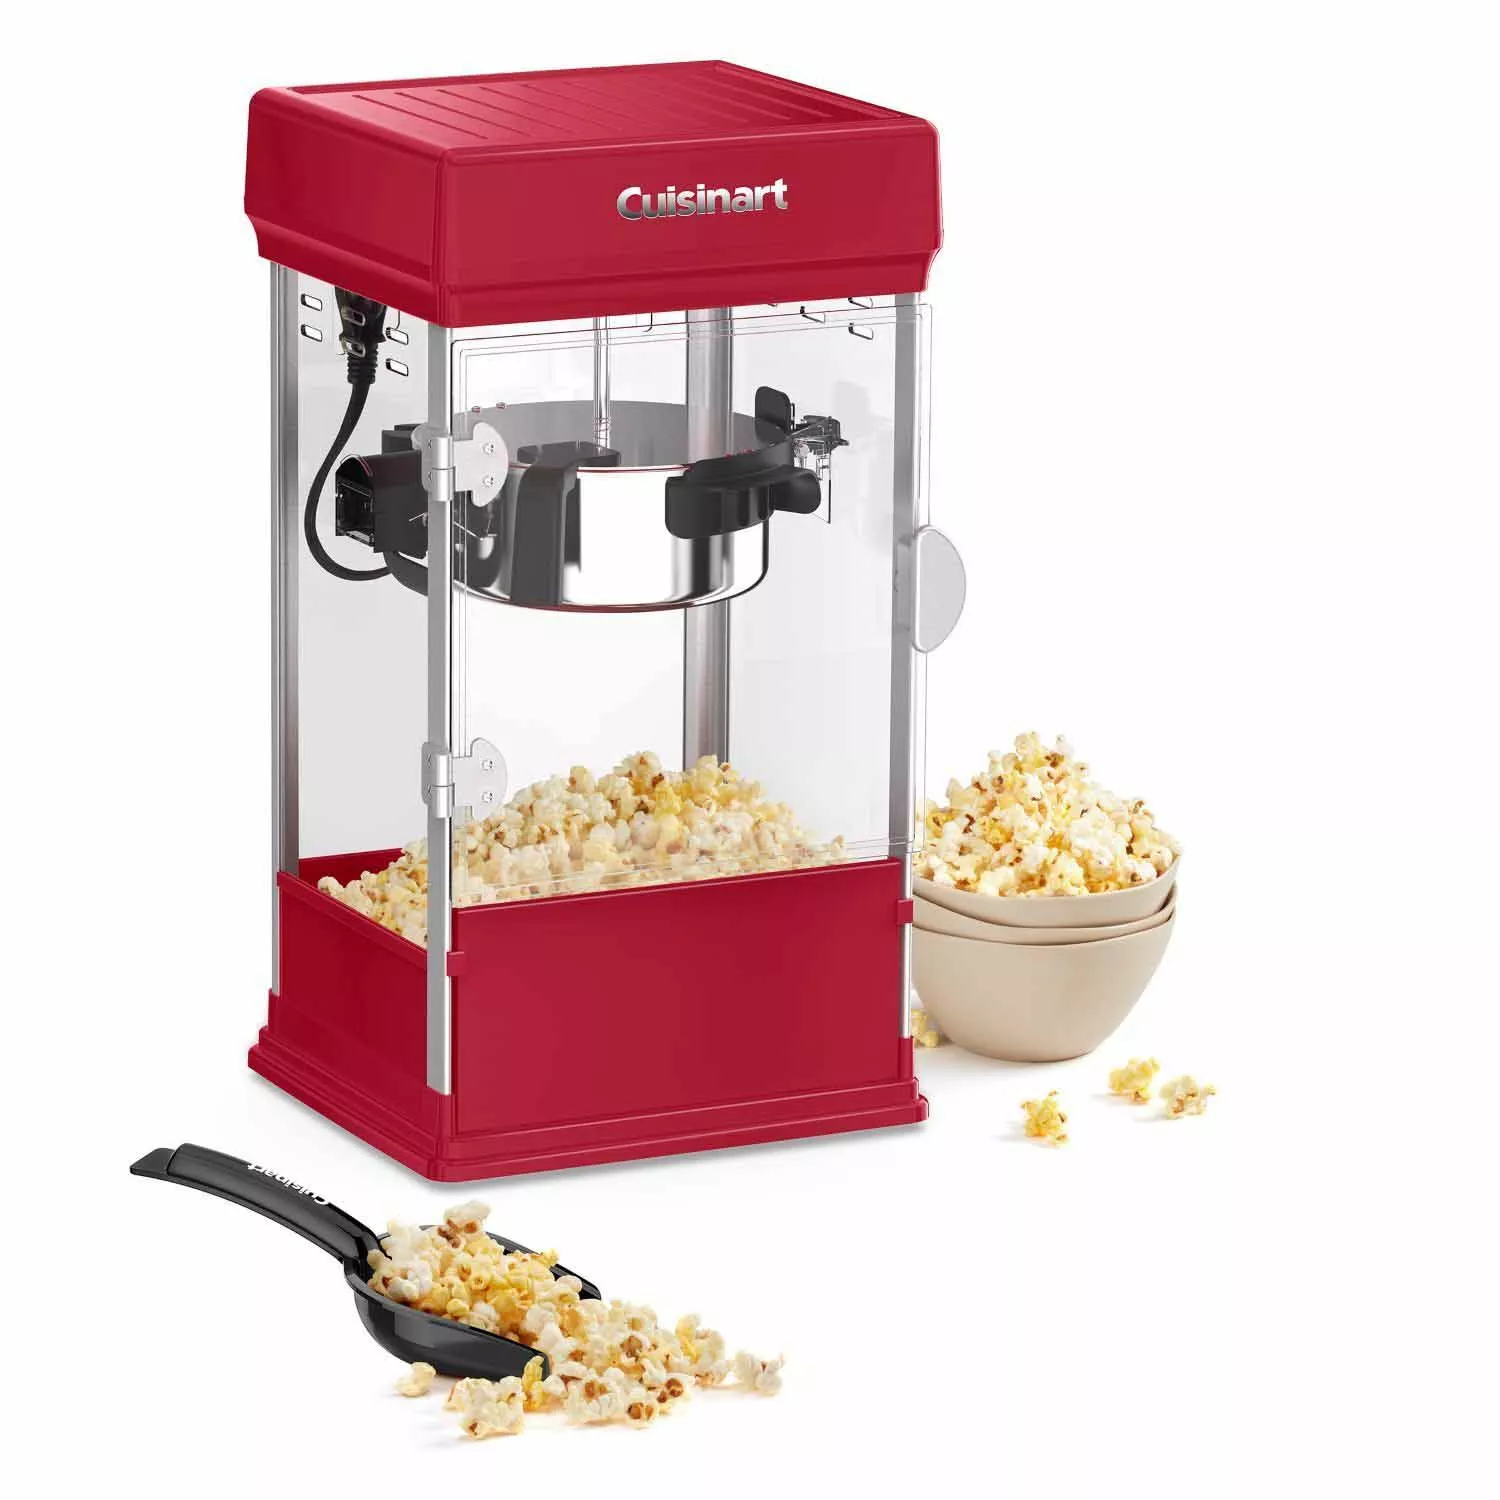 W&P Personal Popcorn Popper - Charcoal